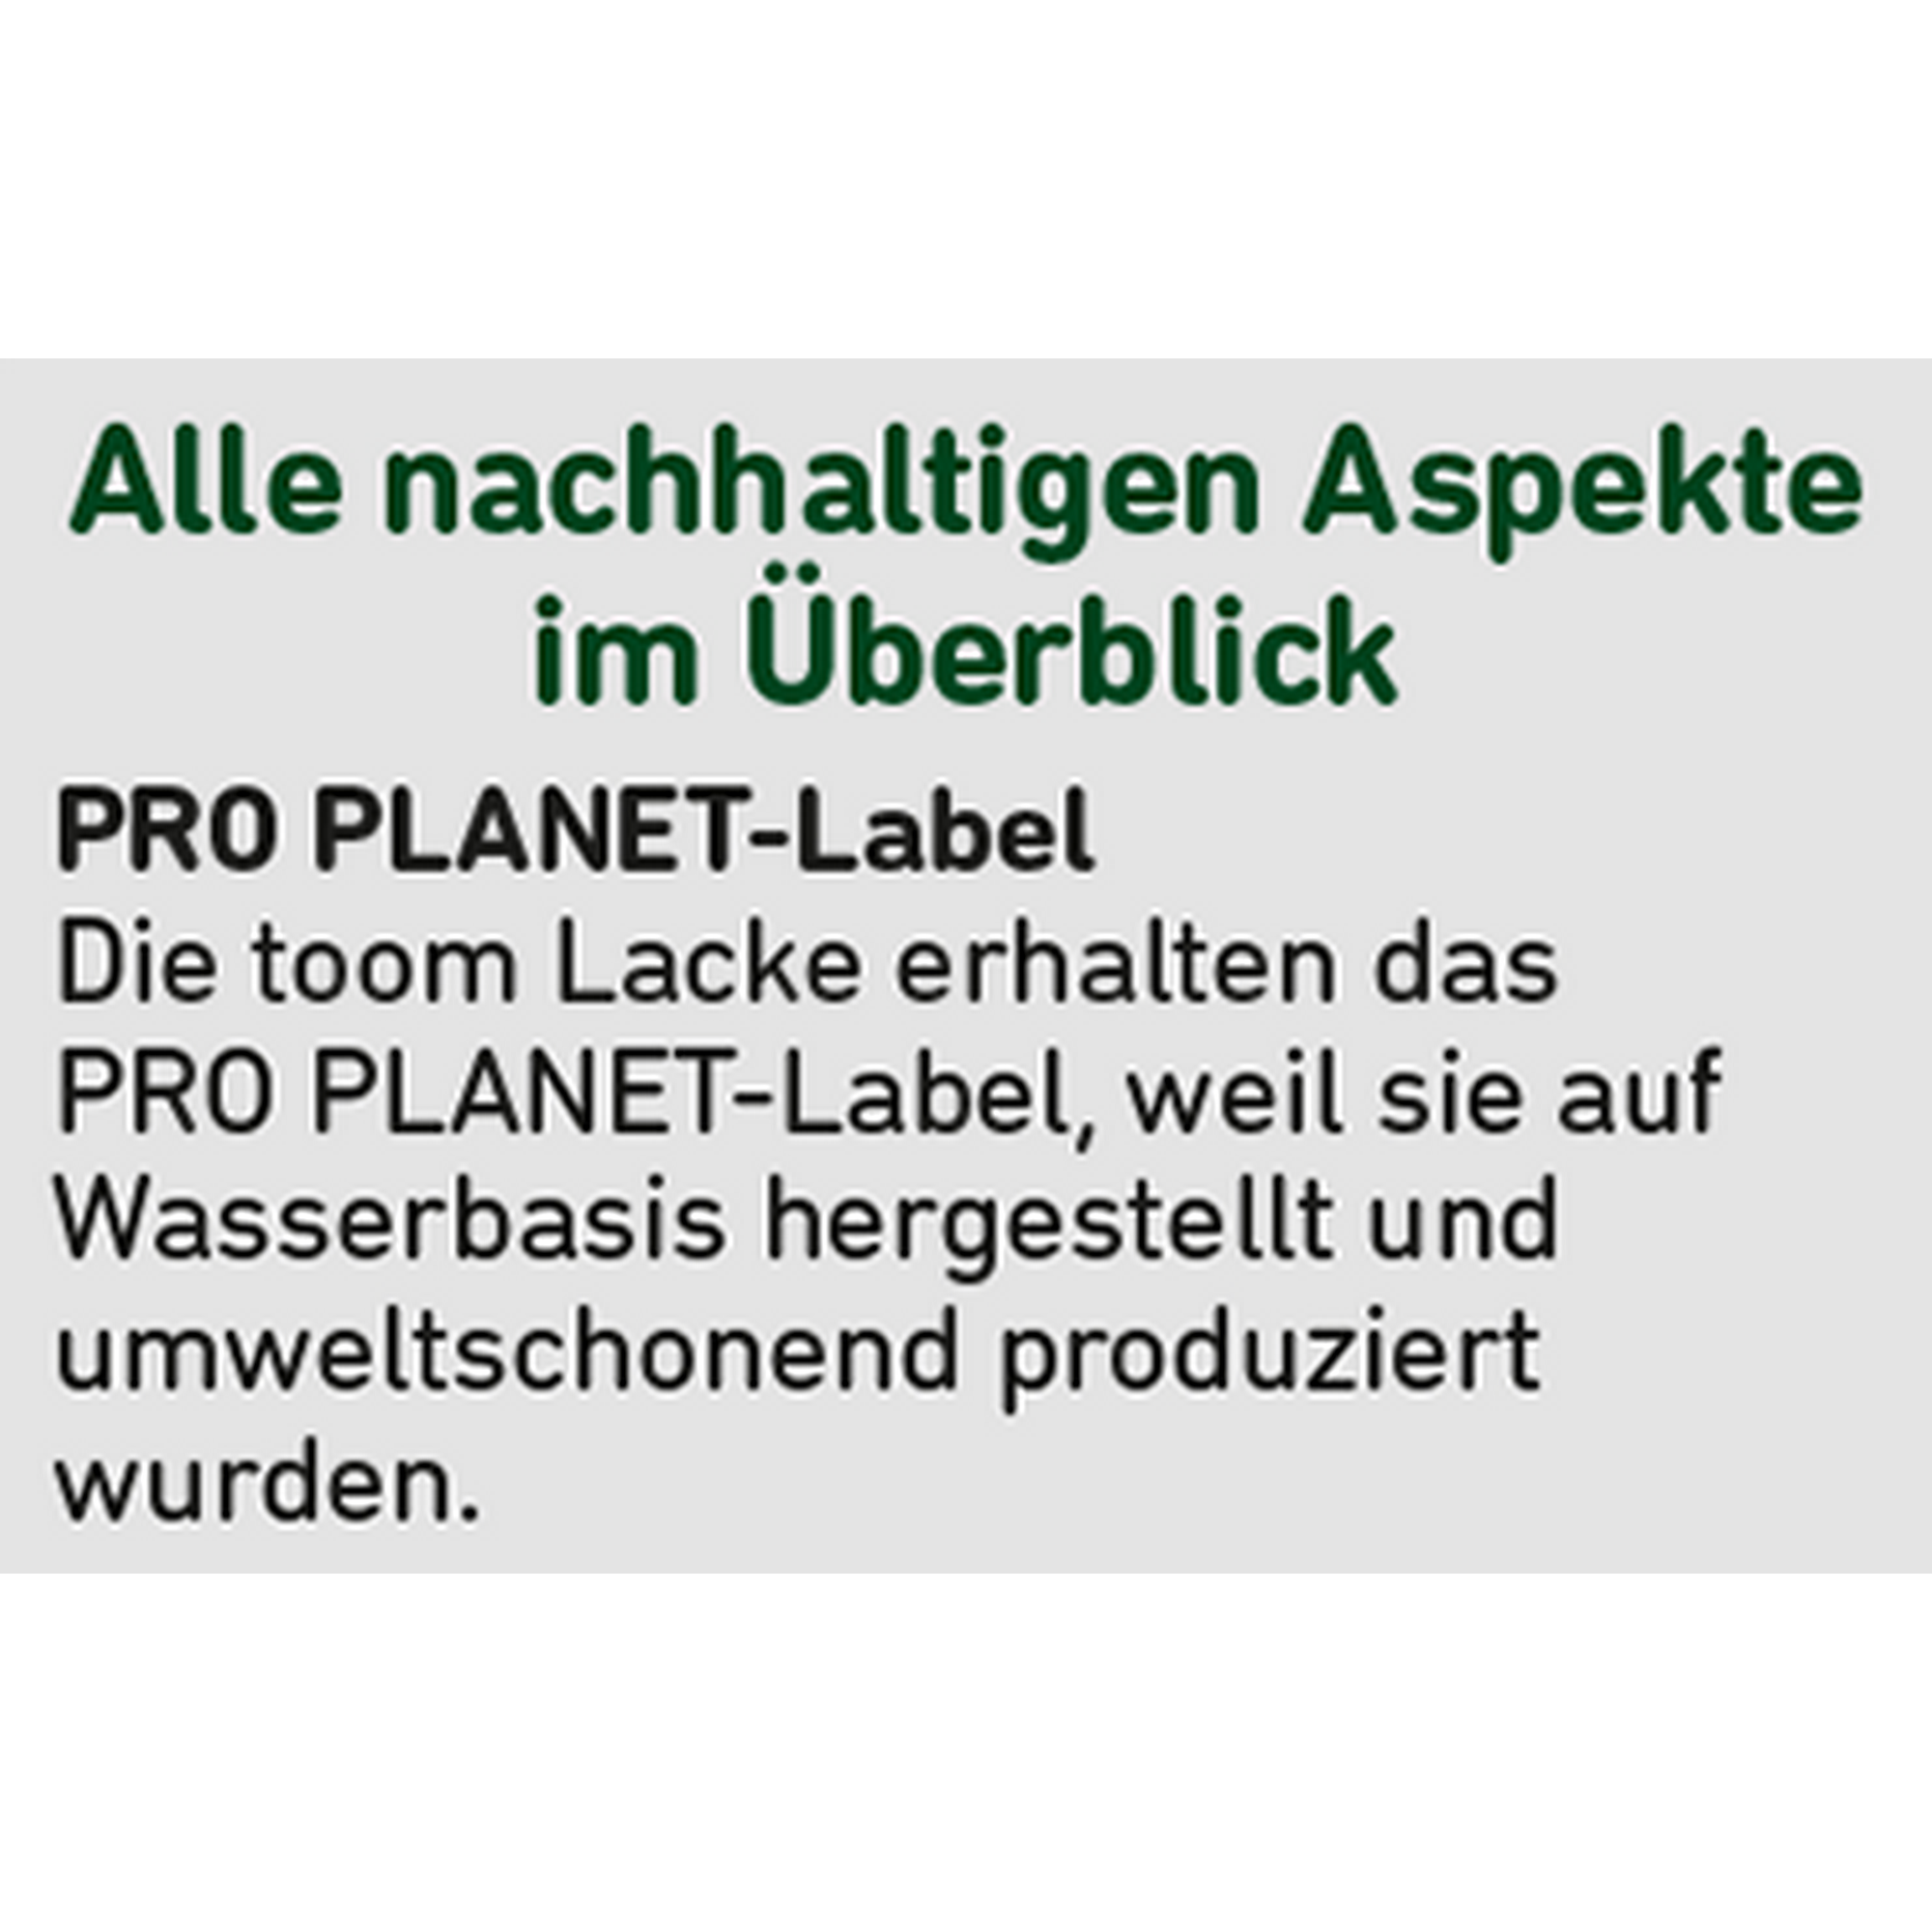 Schultafel-Lack grün matt 750 ml + product picture